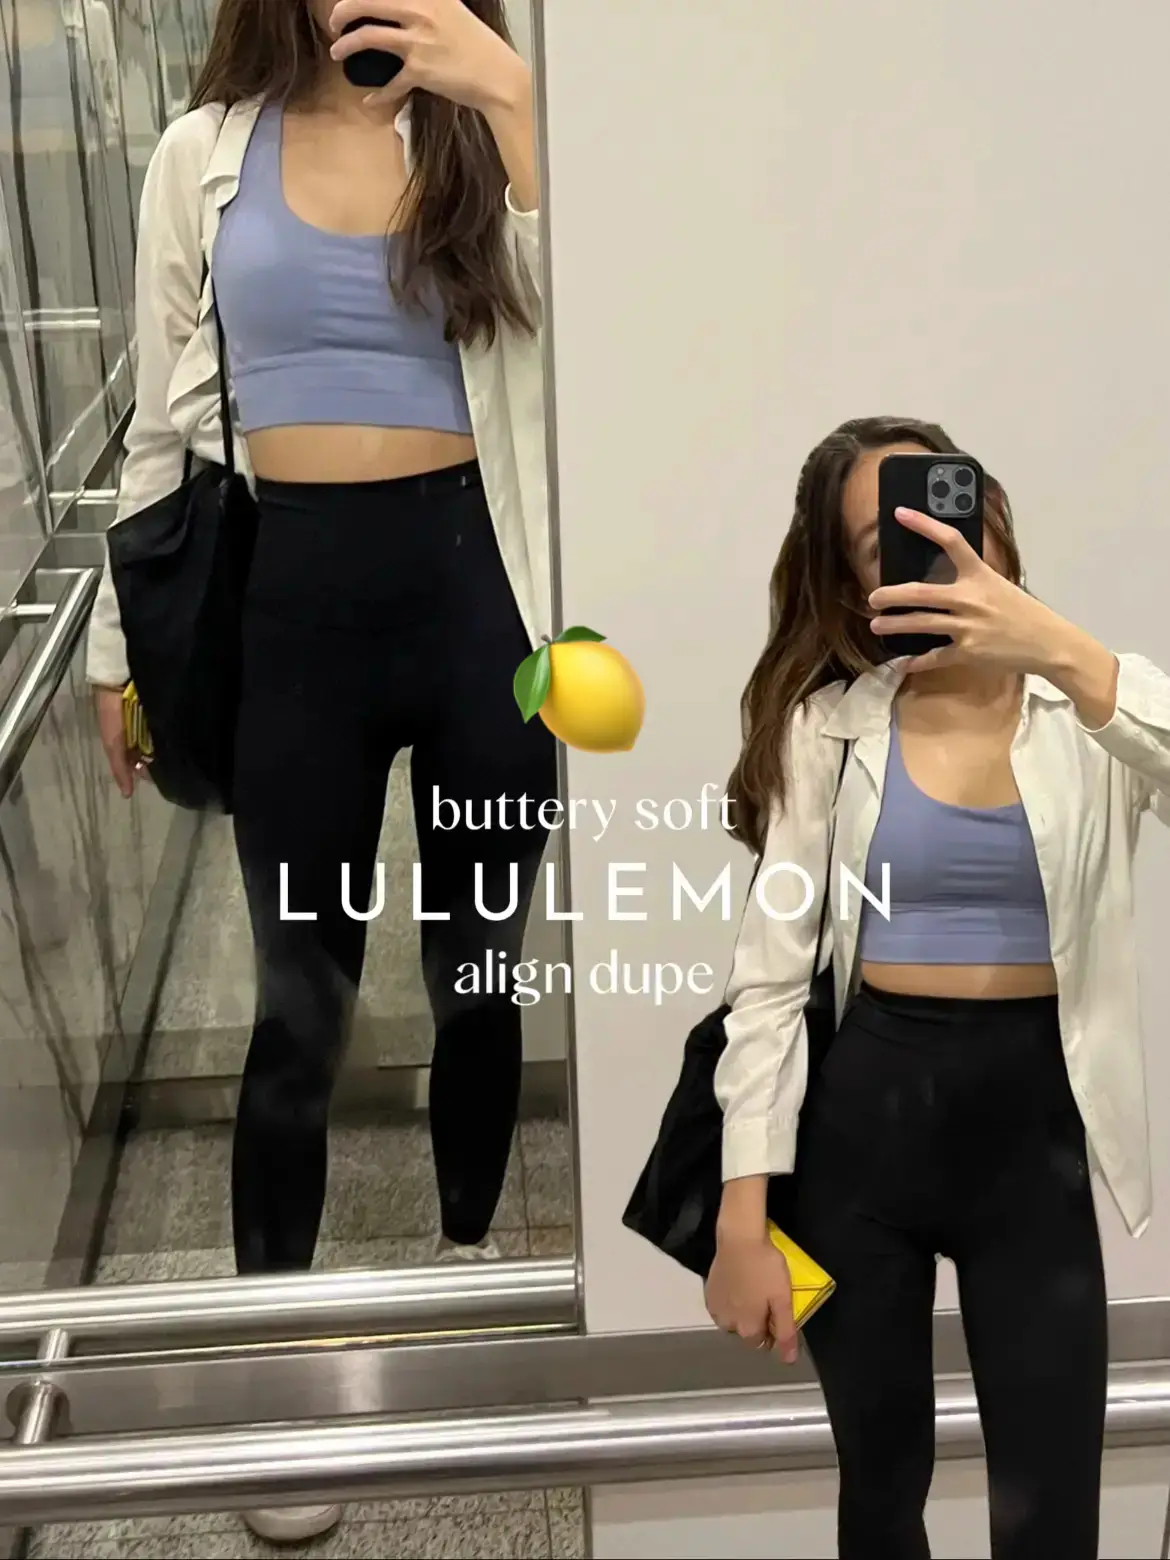 Comparing the  lululemon align legging dupes to the real lululem